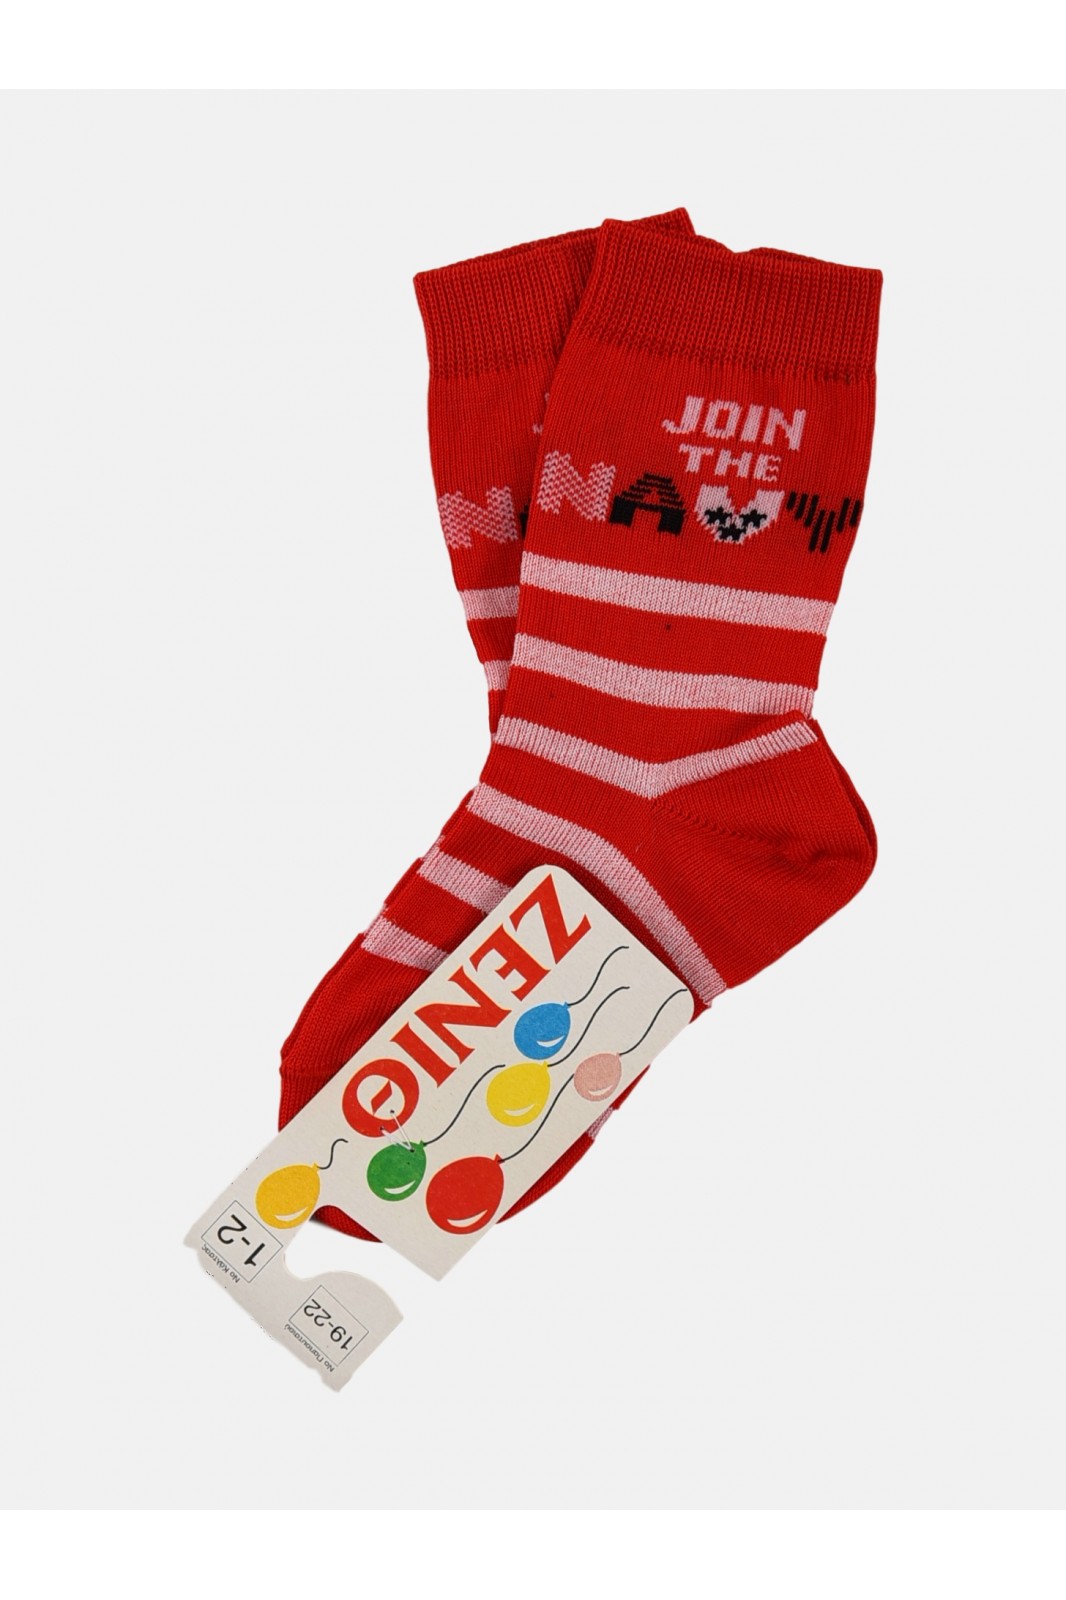 Kids socks for Boy ZENITH Red Lines